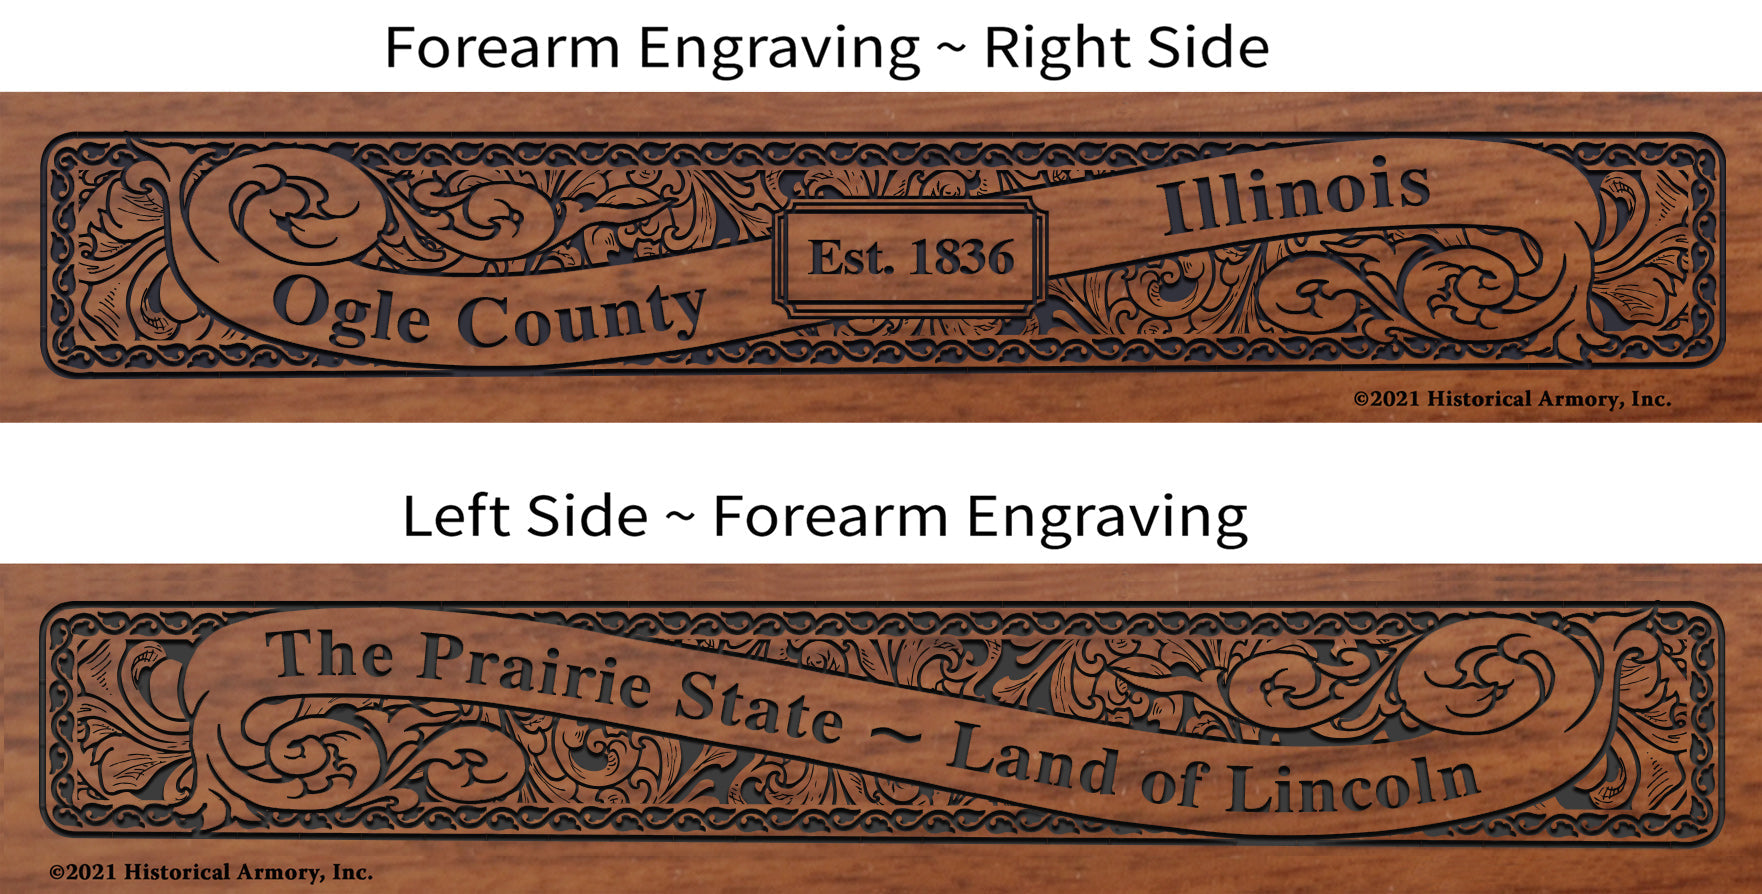 Ogle County Illinois Establishment and Motto History Engraved Rifle Forearm